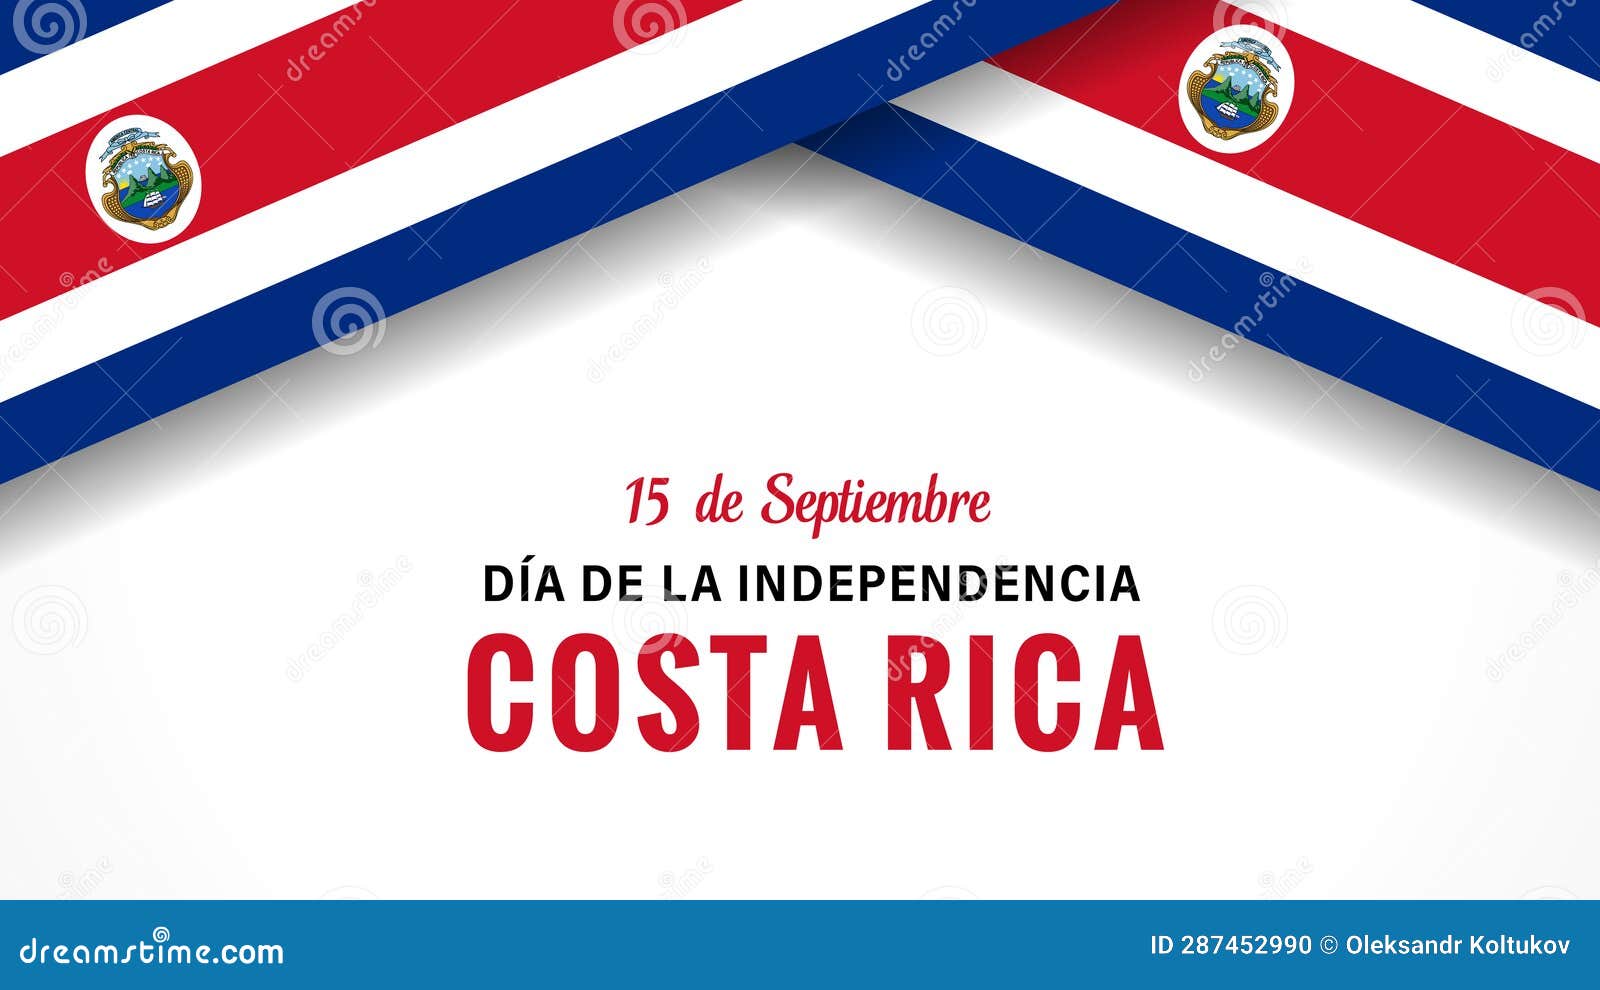 dia de la independencia costa rica, poster with flags